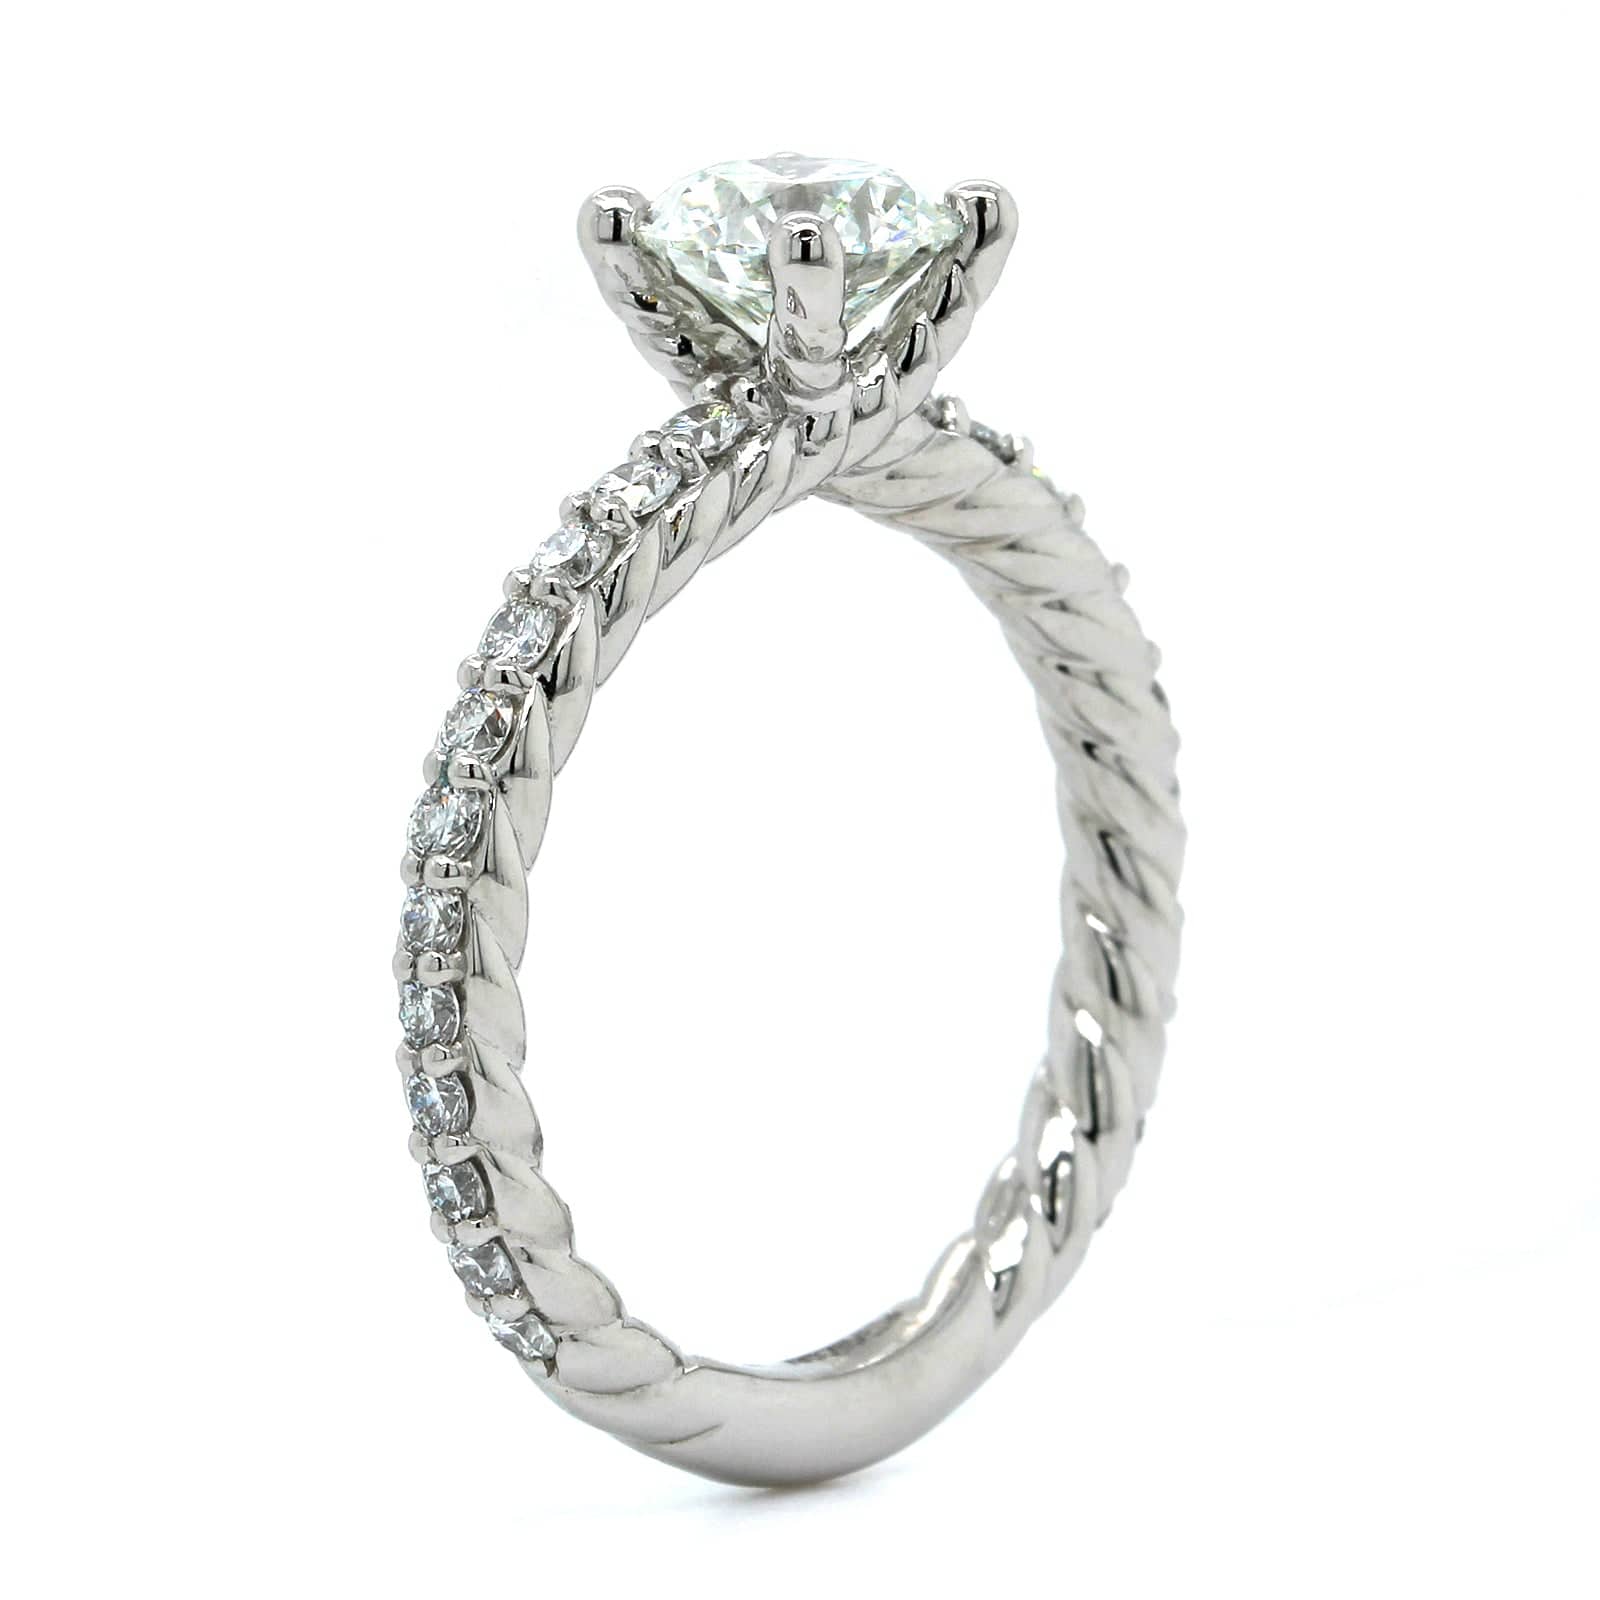 Platinum Round Cut Diamond with Braid Design Engagement Ring